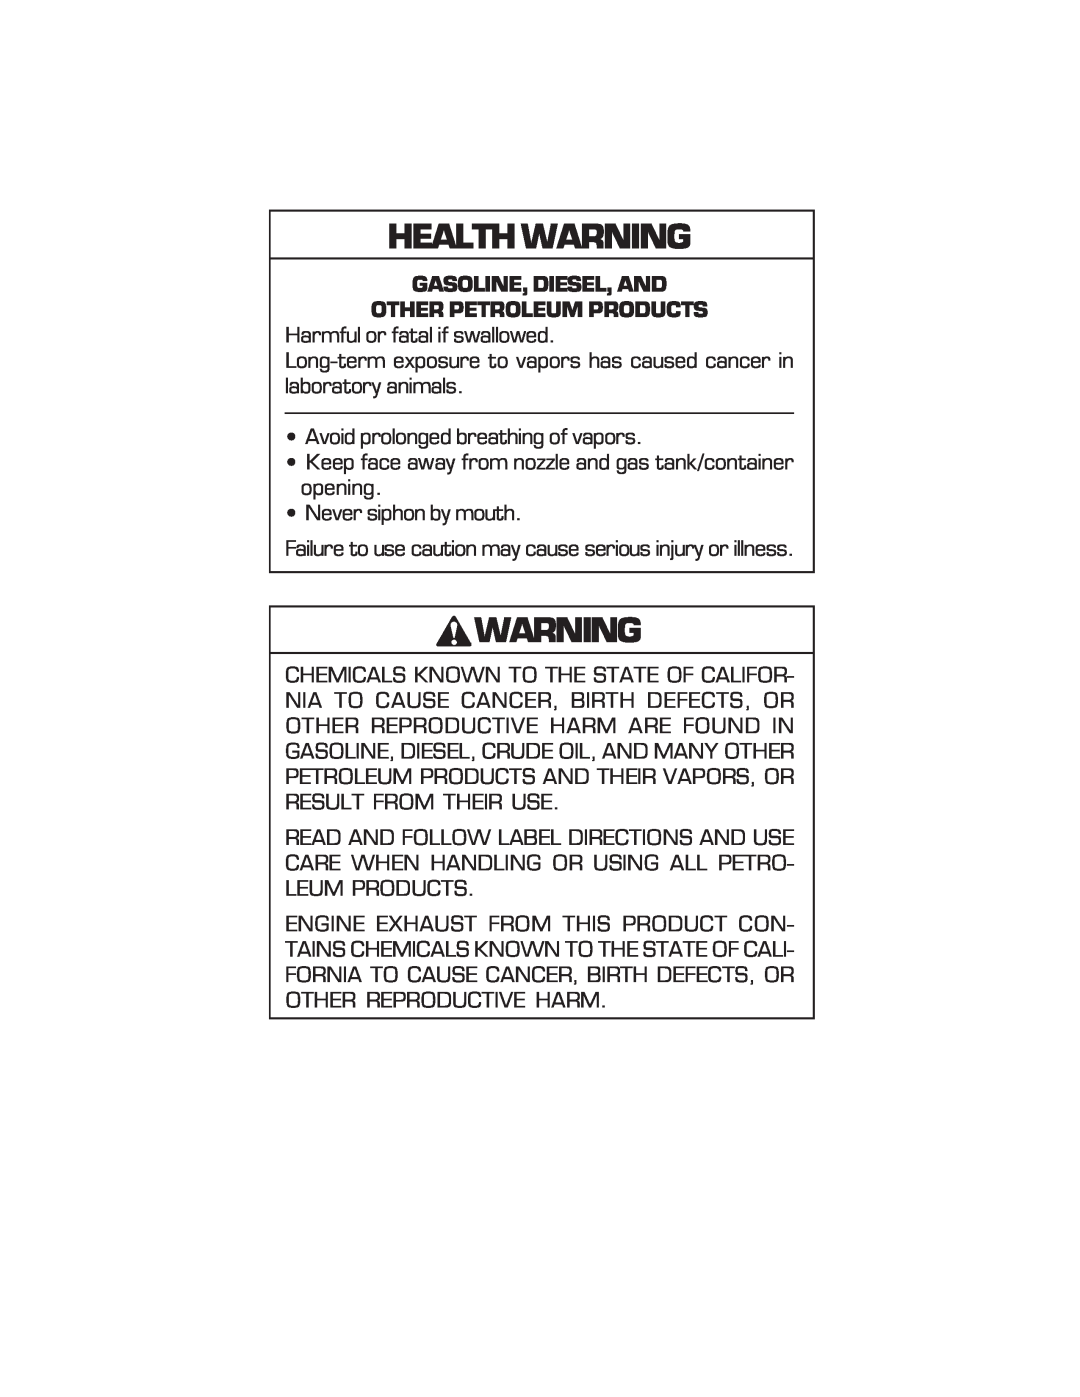 Woods Equipment 8000, 8100 manual Healthwarning 